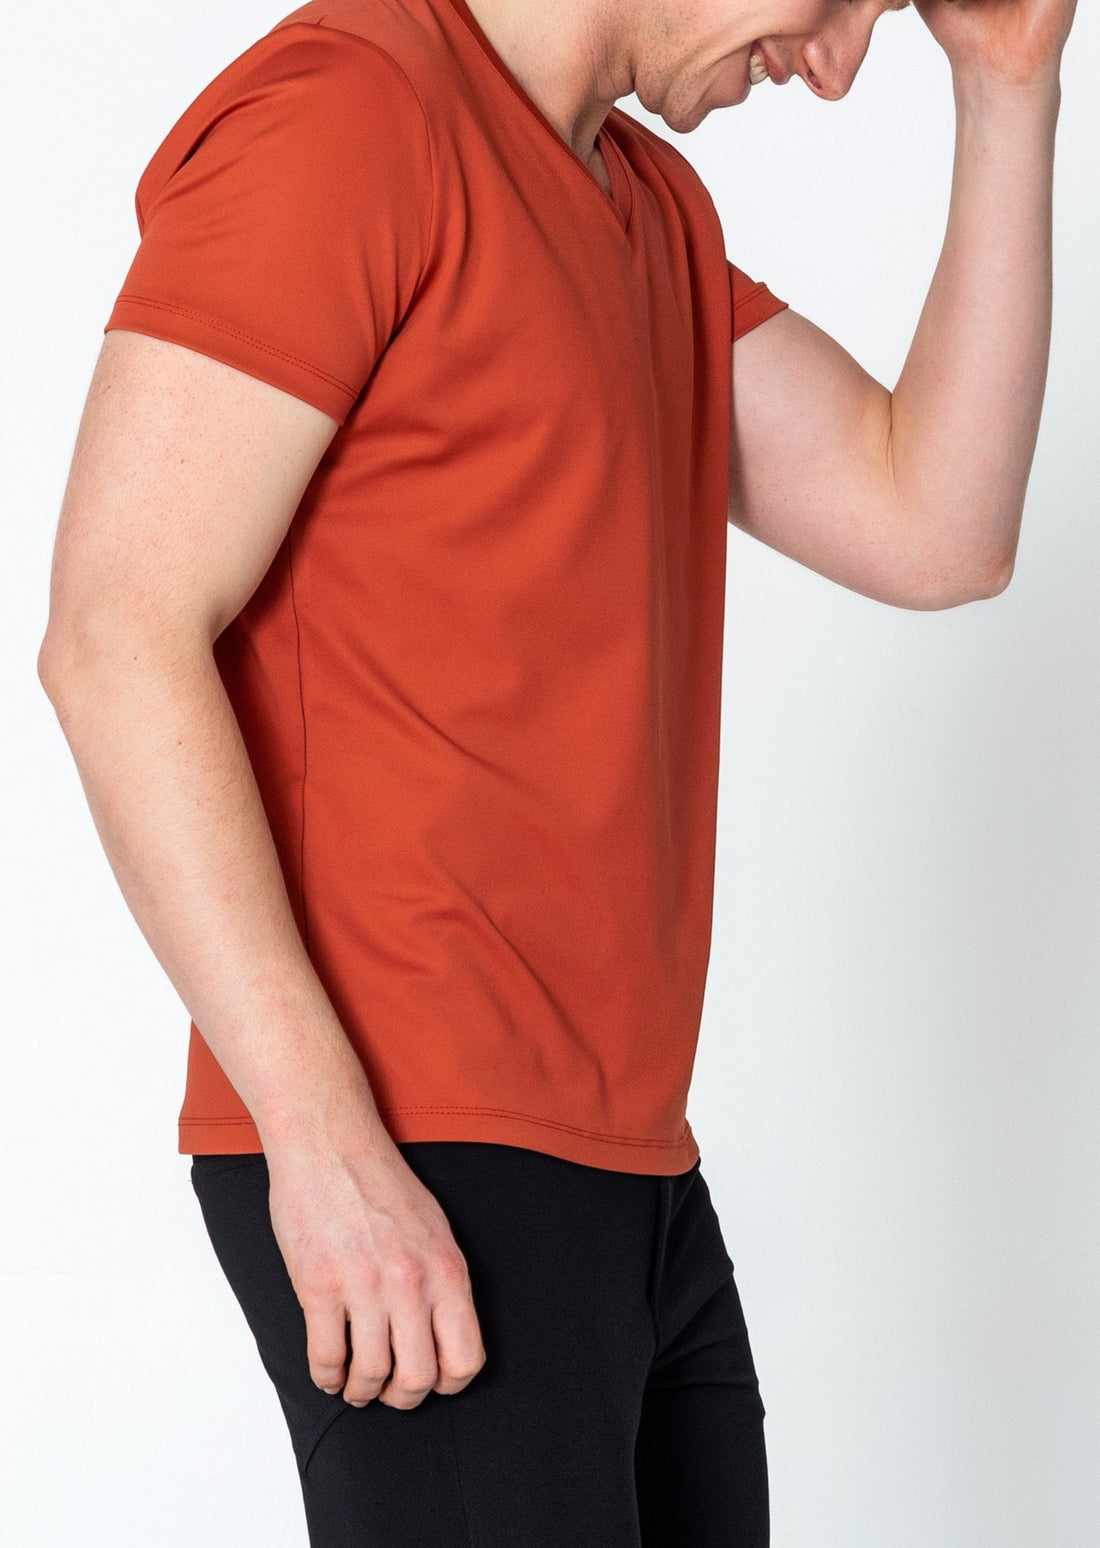 V-neck Fitted Sleeves T-shirt - Tile